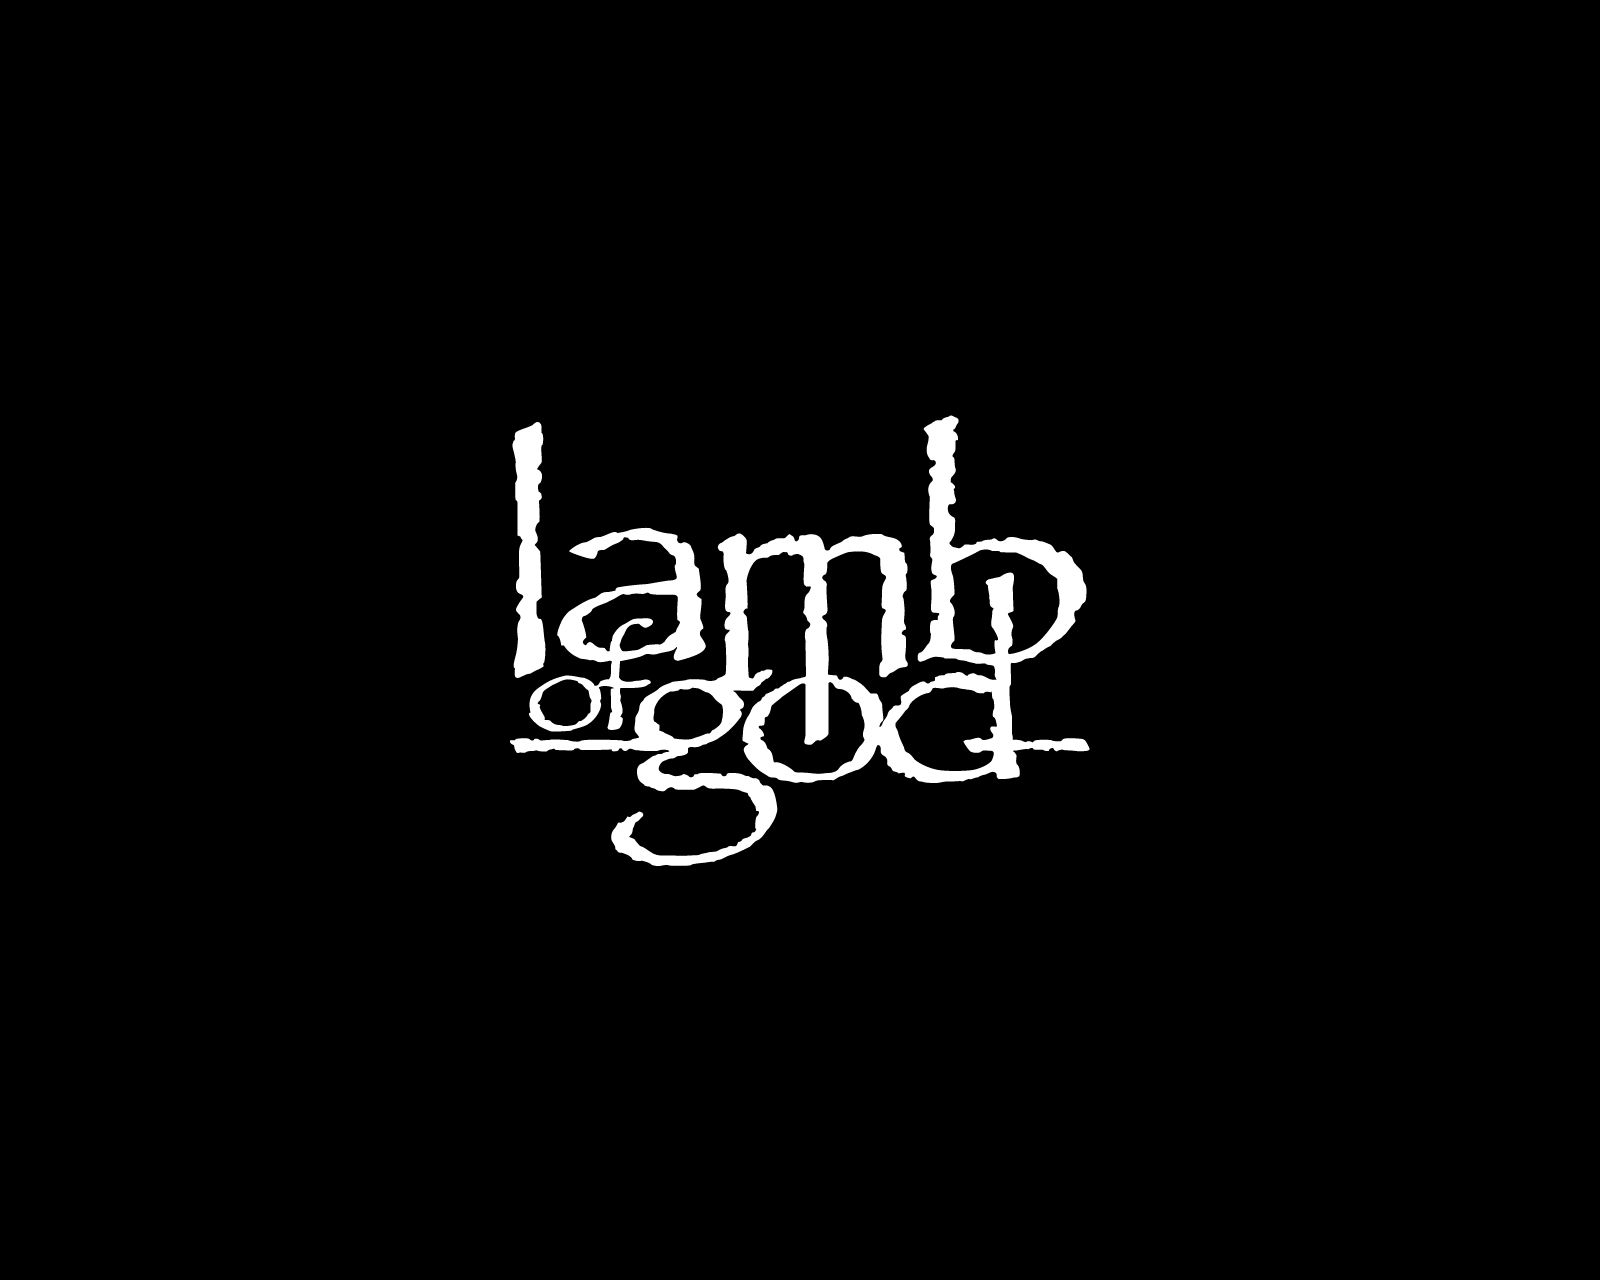 lamb of god, hard rock, music, death metal, heavy metal